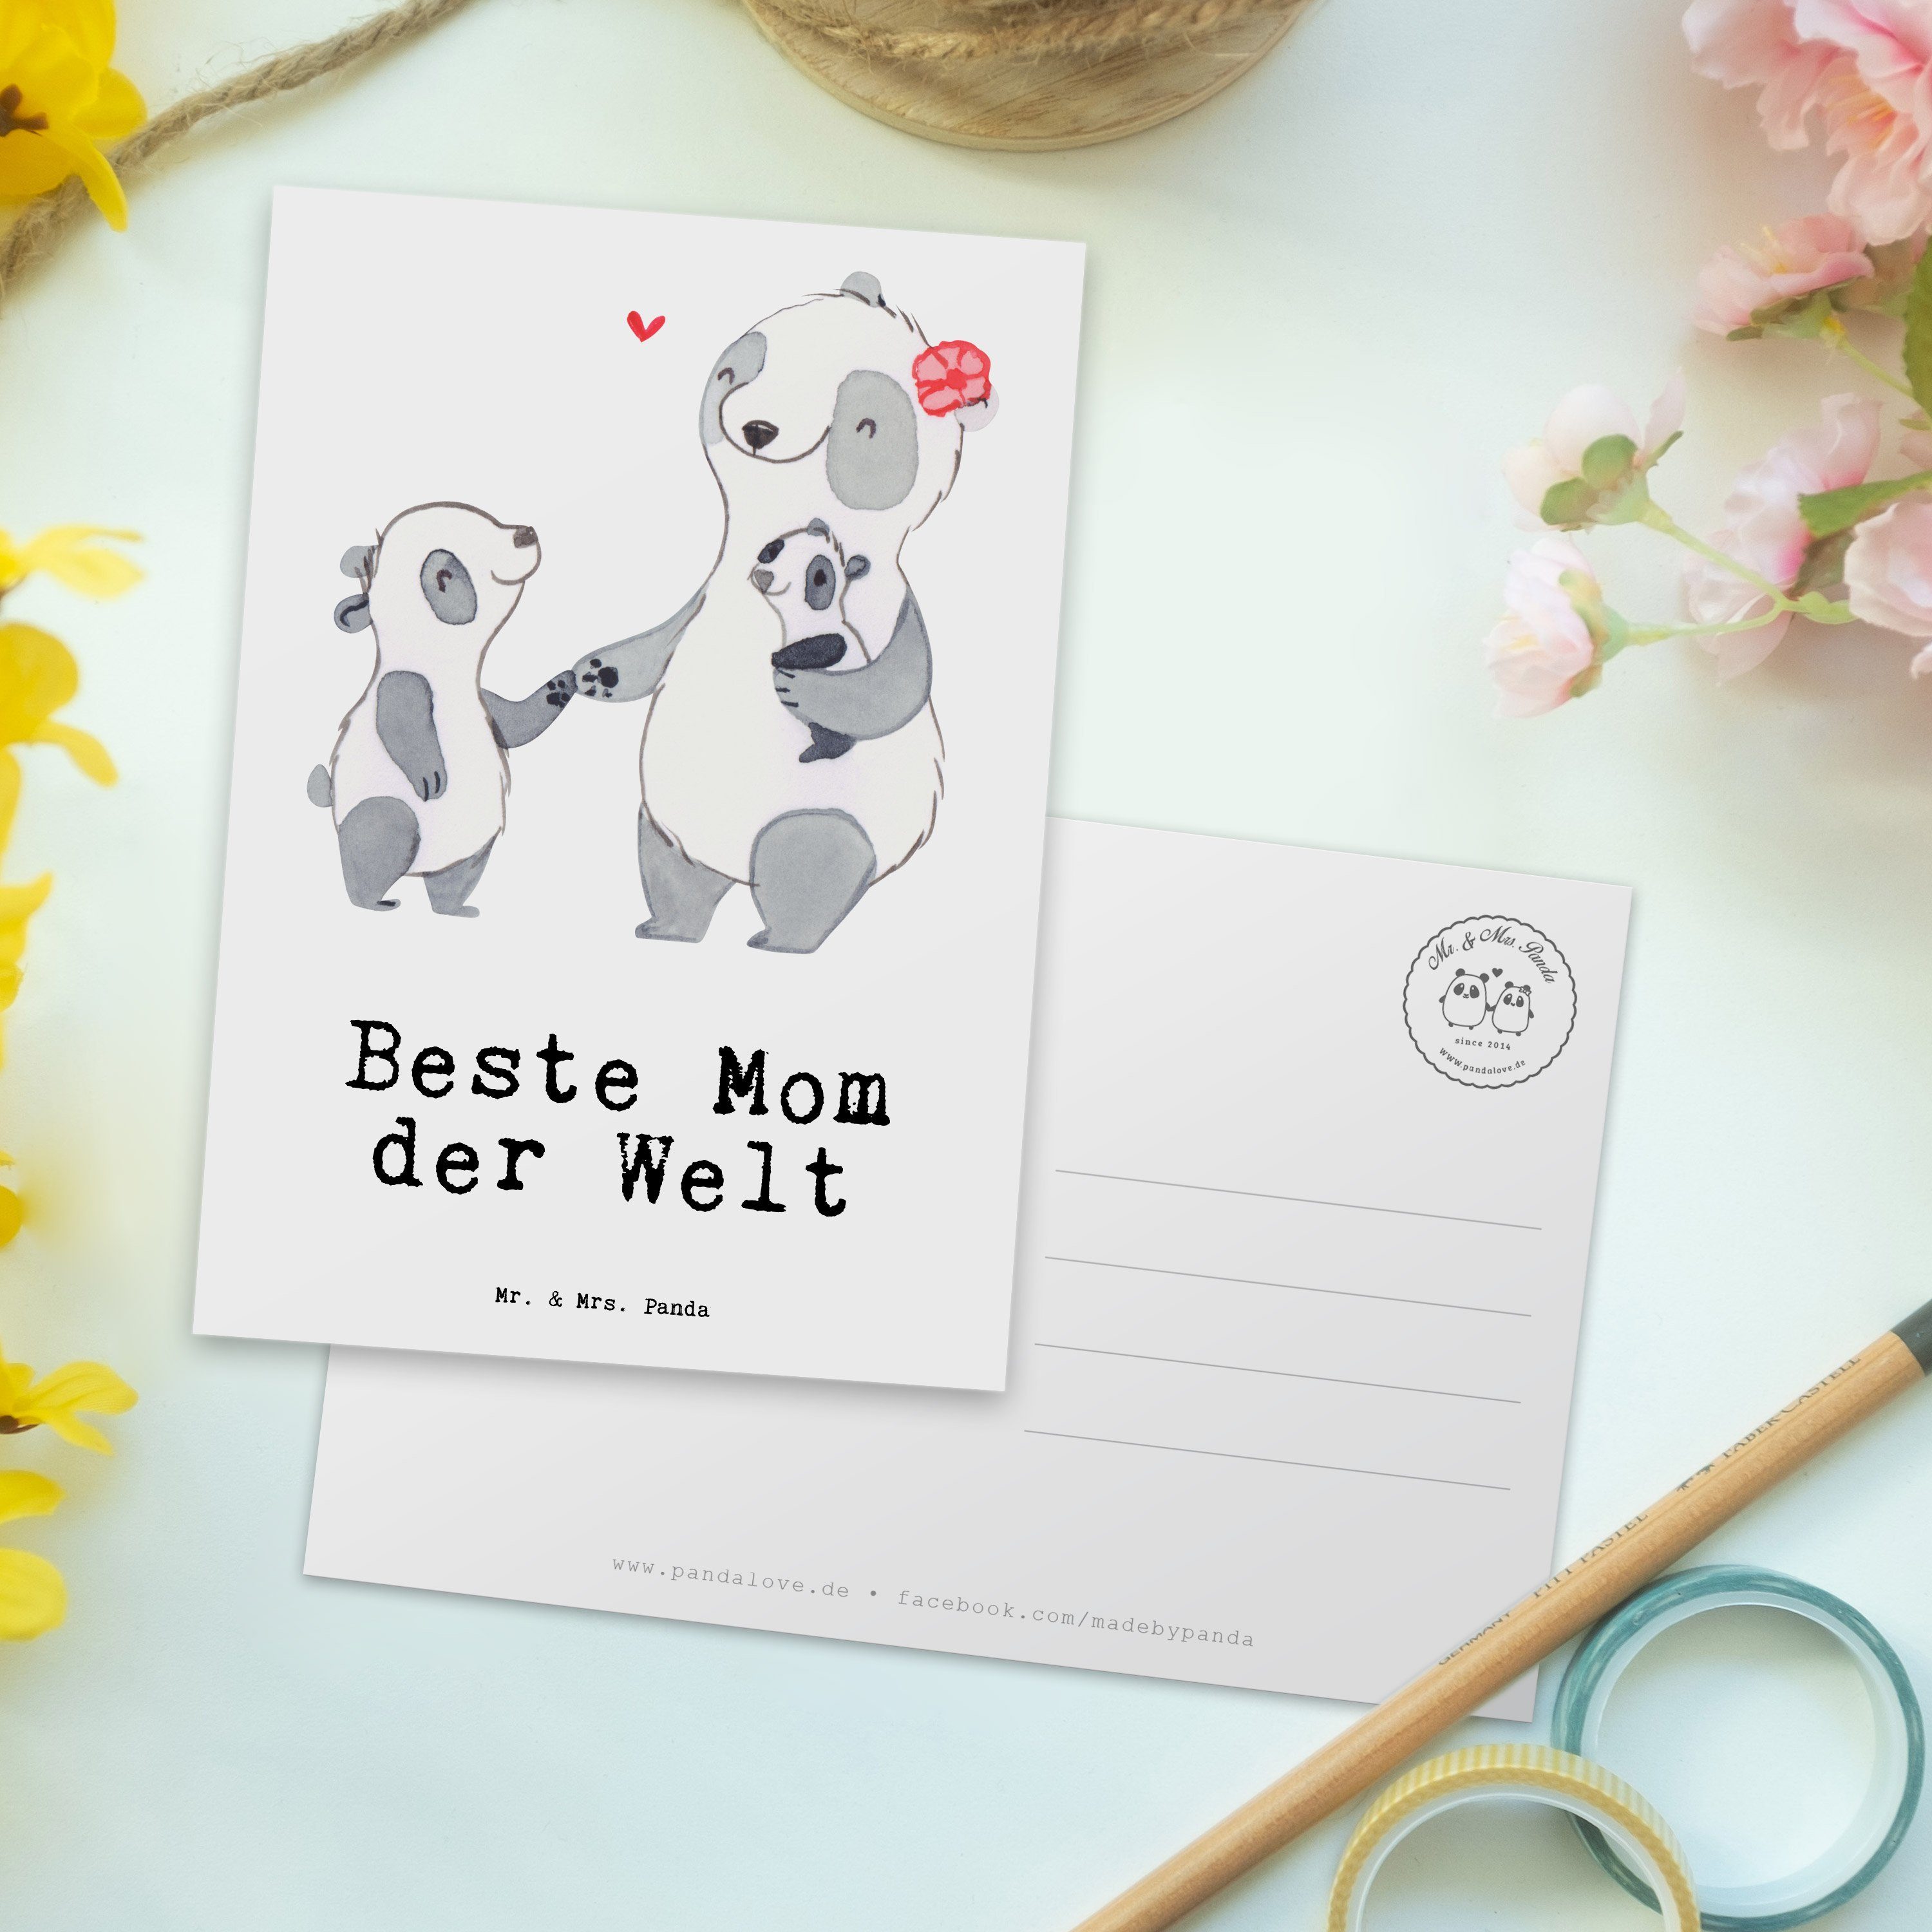 Mr. & Mrs. Panda Postkarte Dankeschön, Welt der - Beste Grußk - Weiß Mom Mutter, Panda Geschenk